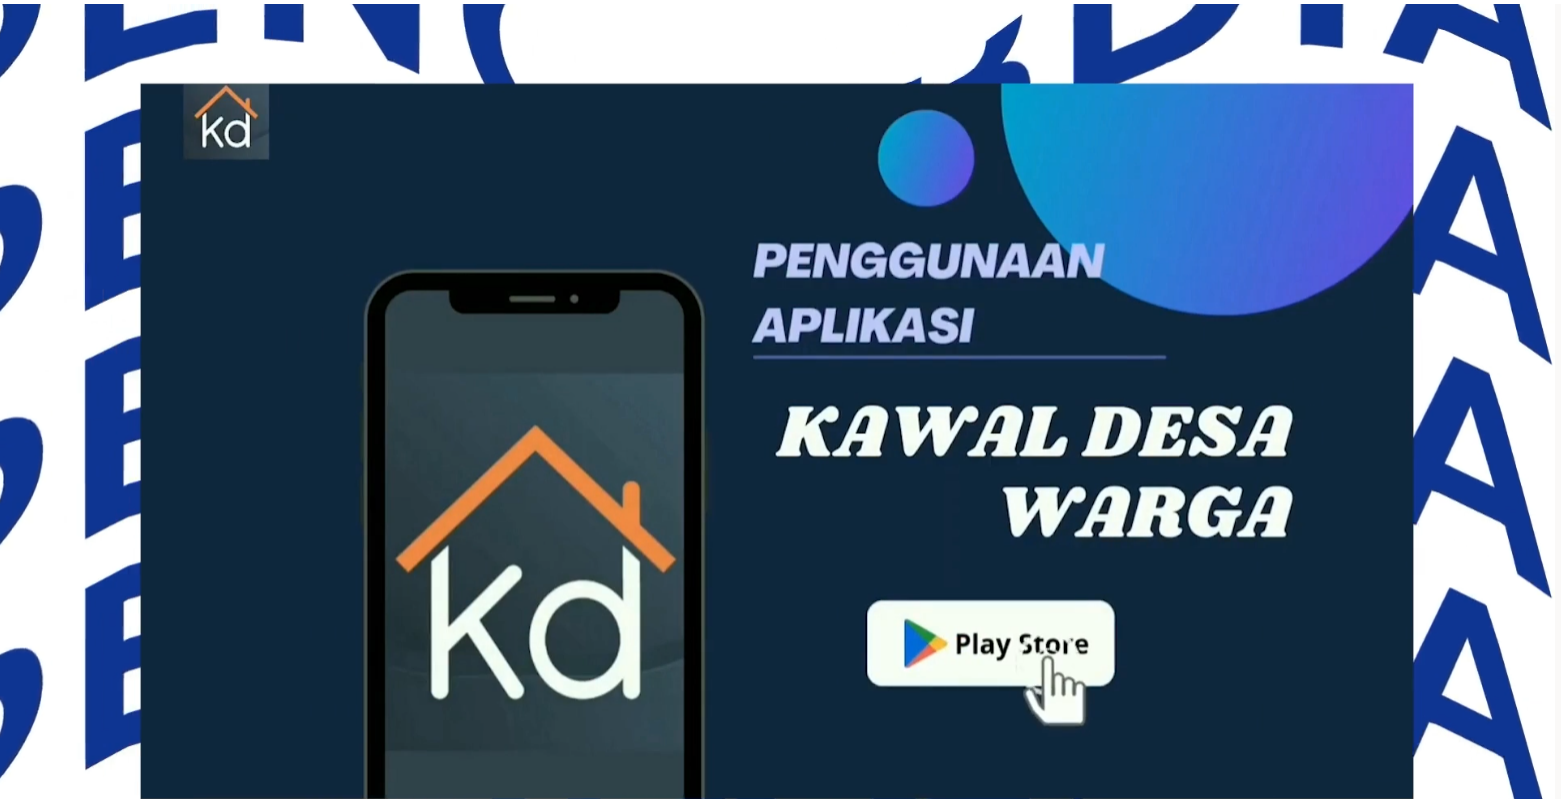 Diseminasi Aplikasi Kawal Desa Untuk Meningkatkan Tata Kelola Digitalisasi Di Desa Karangpawitan Kabupaten Kawali Propinsi Jawa Barat